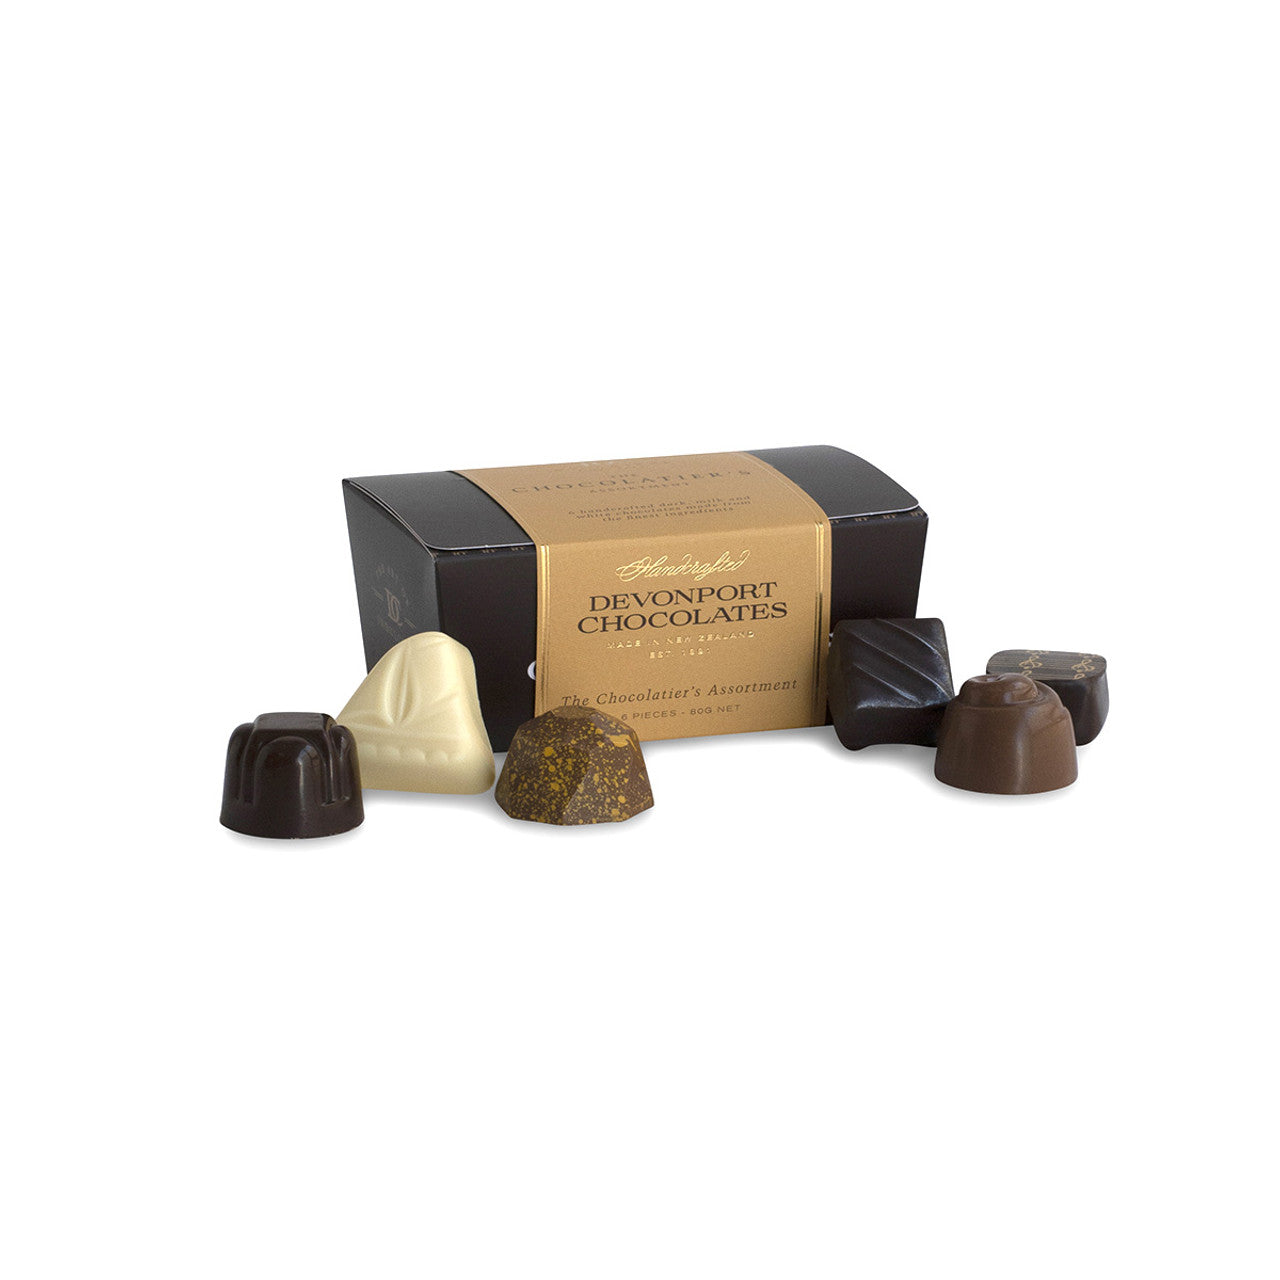 Devonport chocolates -set of 6